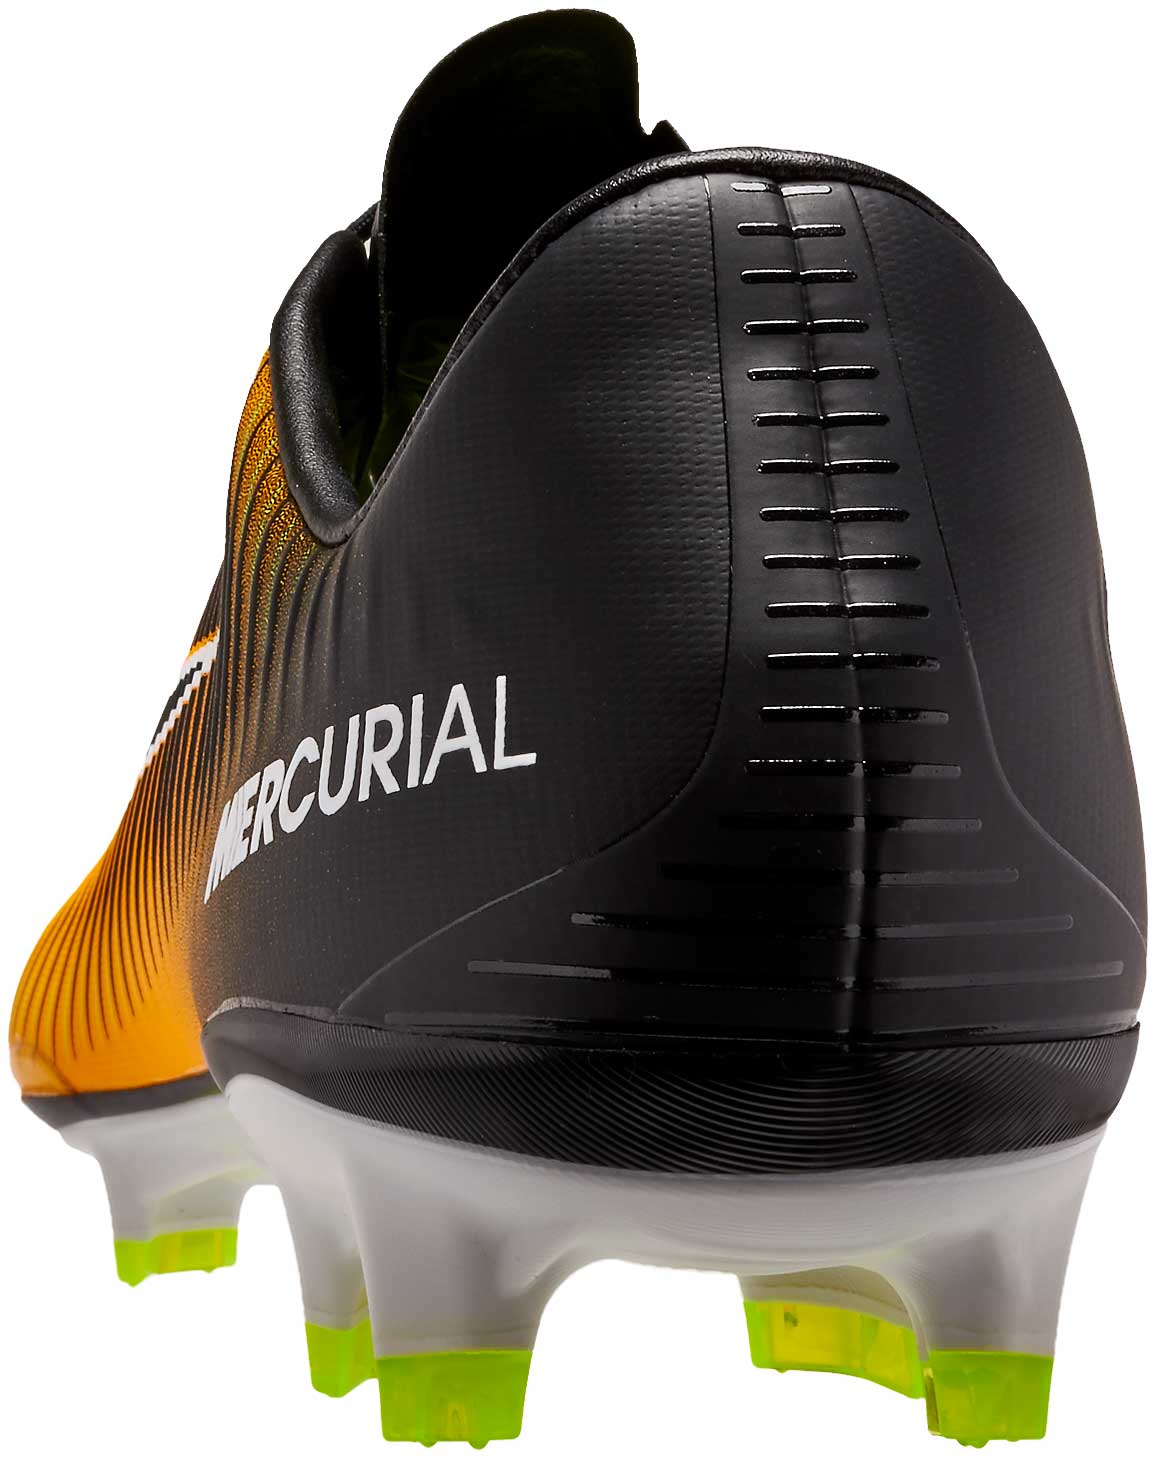 Nike Mercurial Vapor XI FG Soccer Cleats - Nike Mercurials